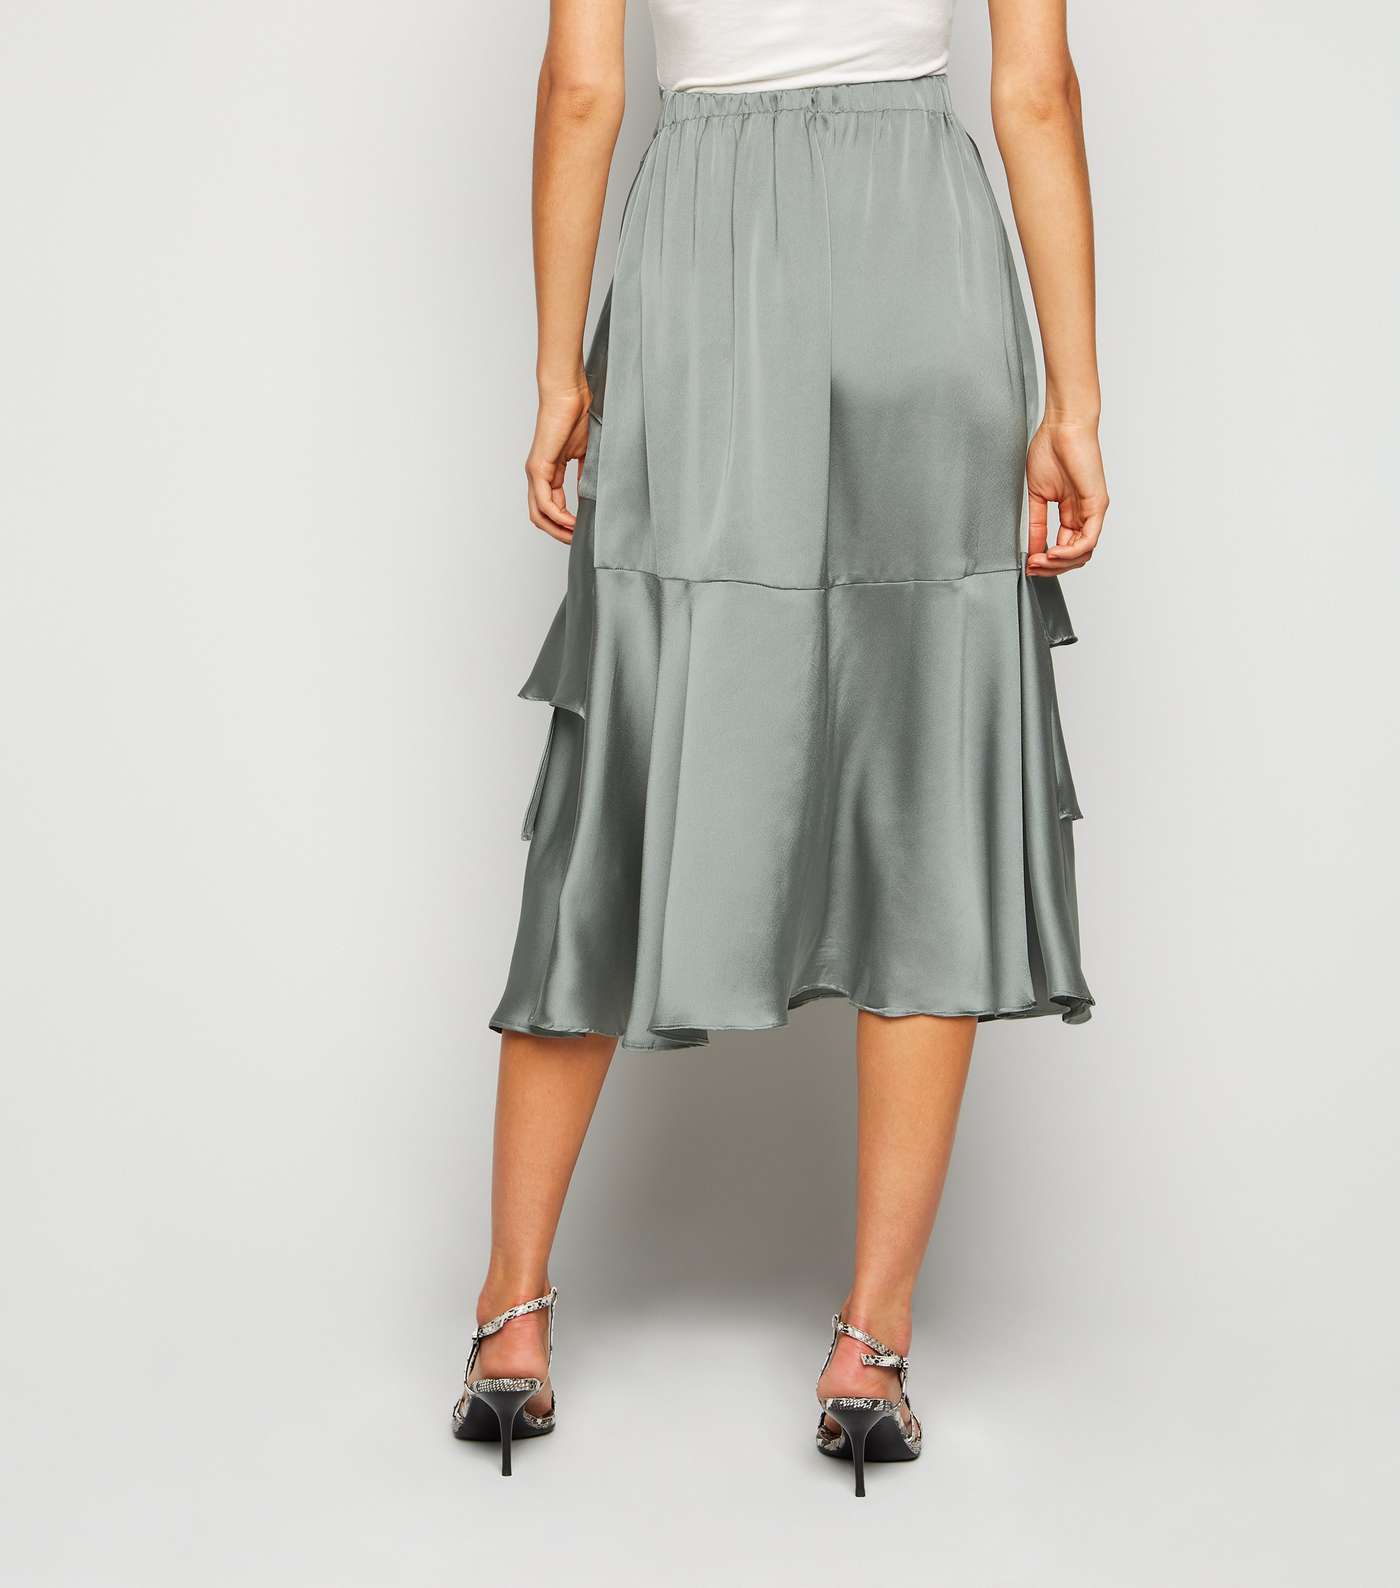 Urban Bliss Olive Satin Ruffle Skirt Image 3